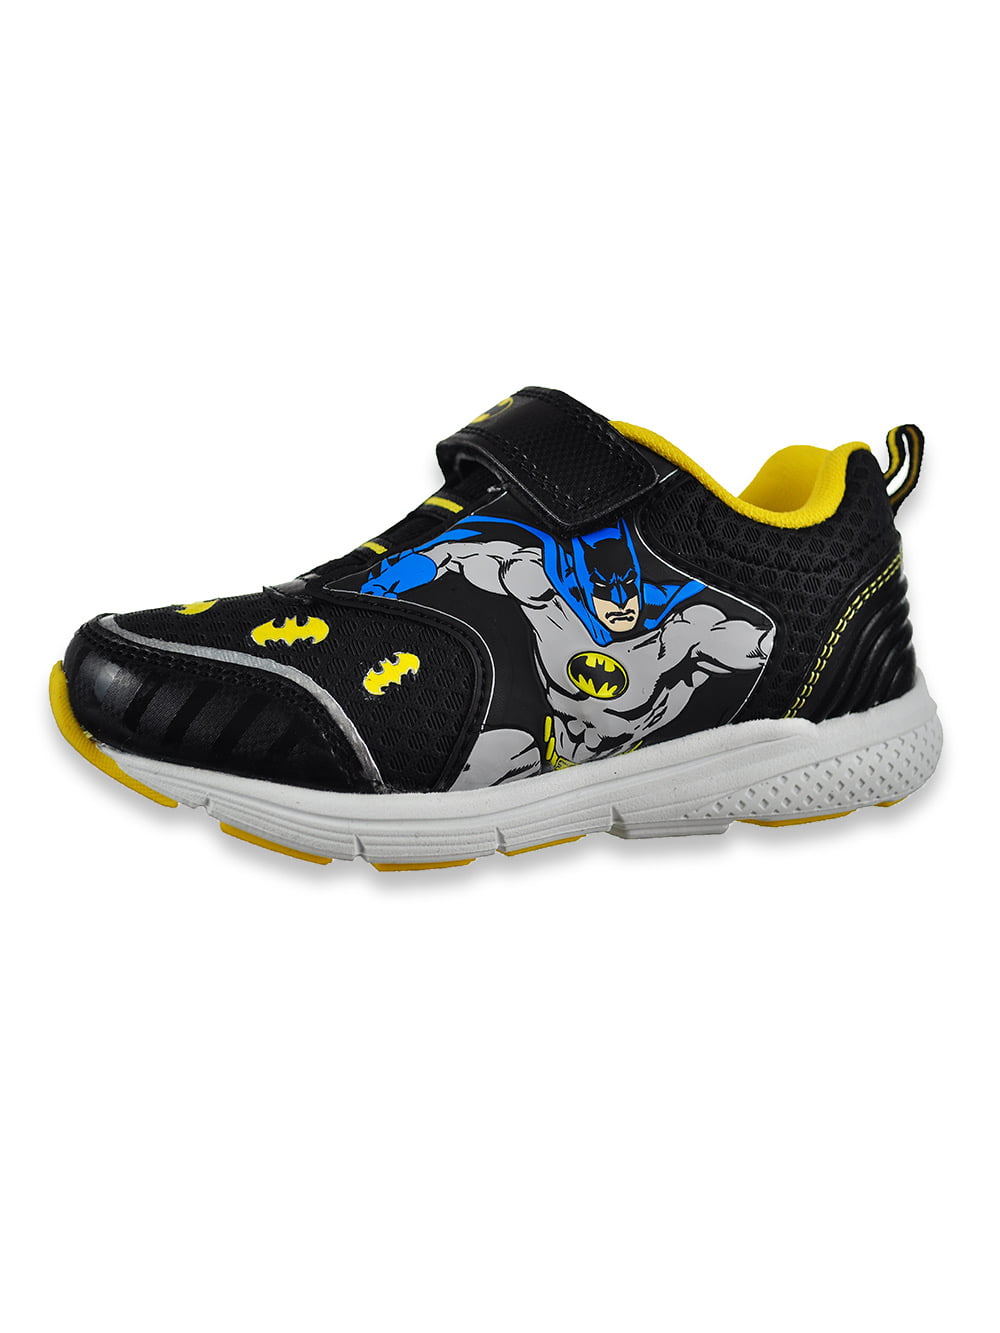 NEW Boys Batman Tennis Shoes Size 13 Athletic Light Up Sneakers Superhero DC 